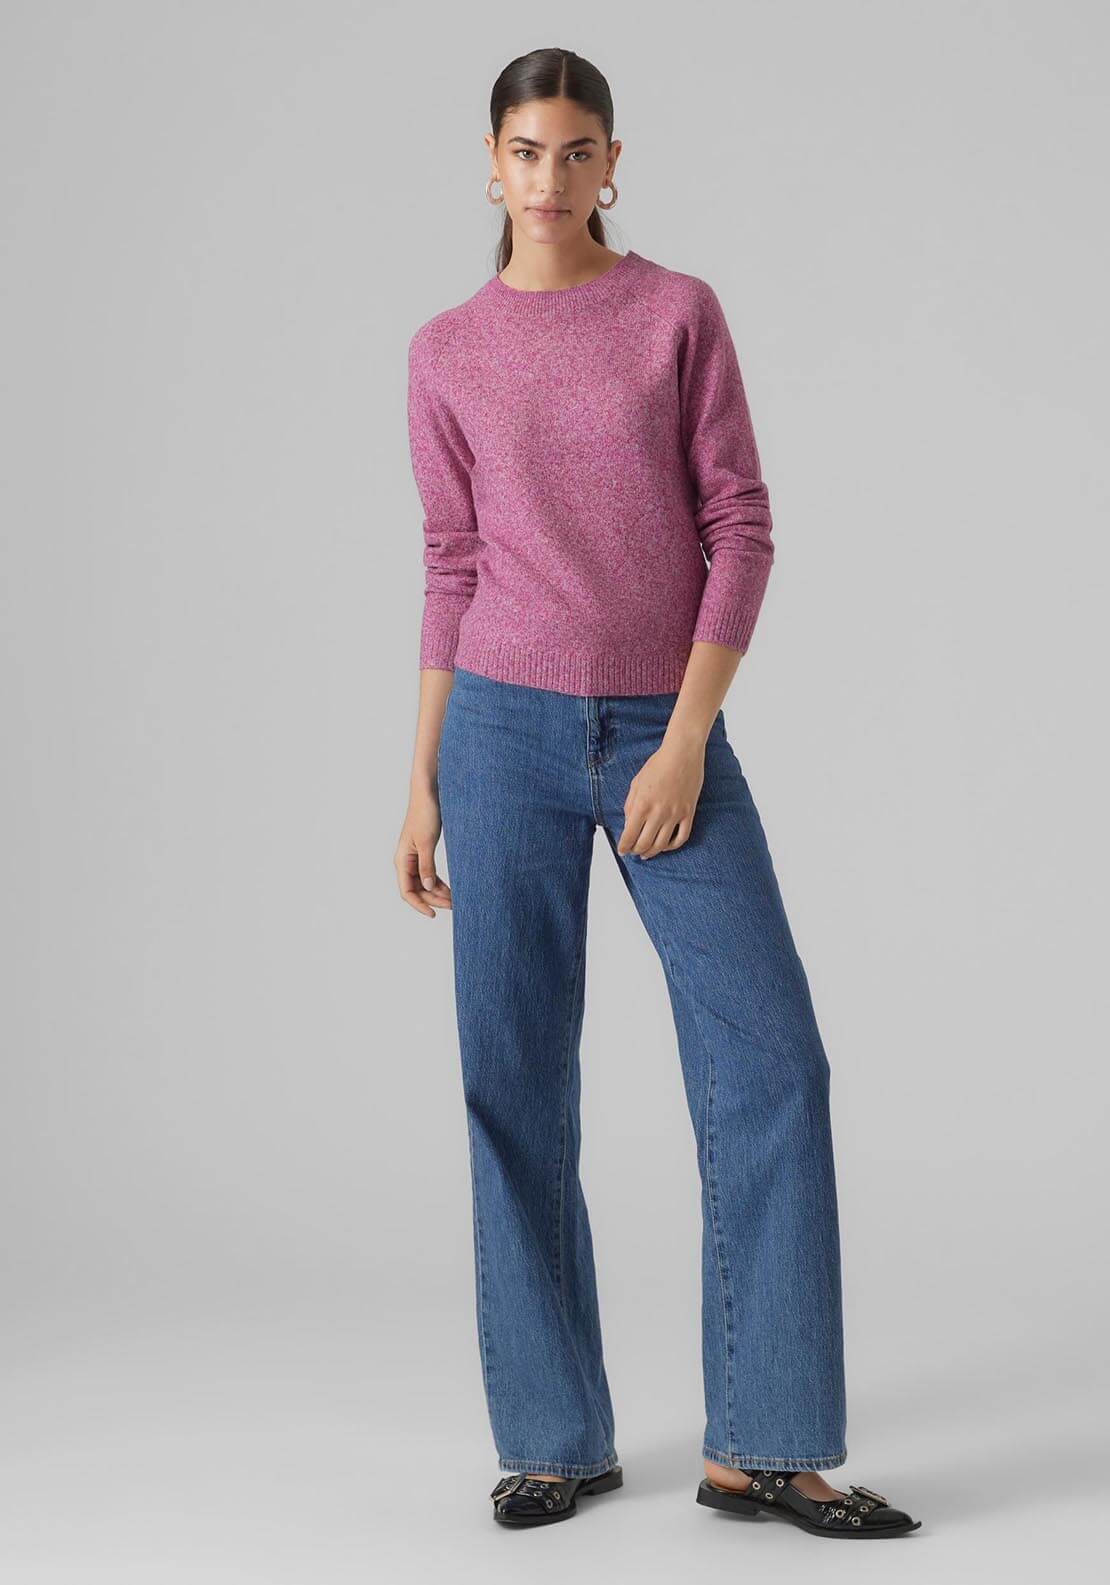 Vero Moda Pullover Jumper - Pink 2 Shaws Department Stores